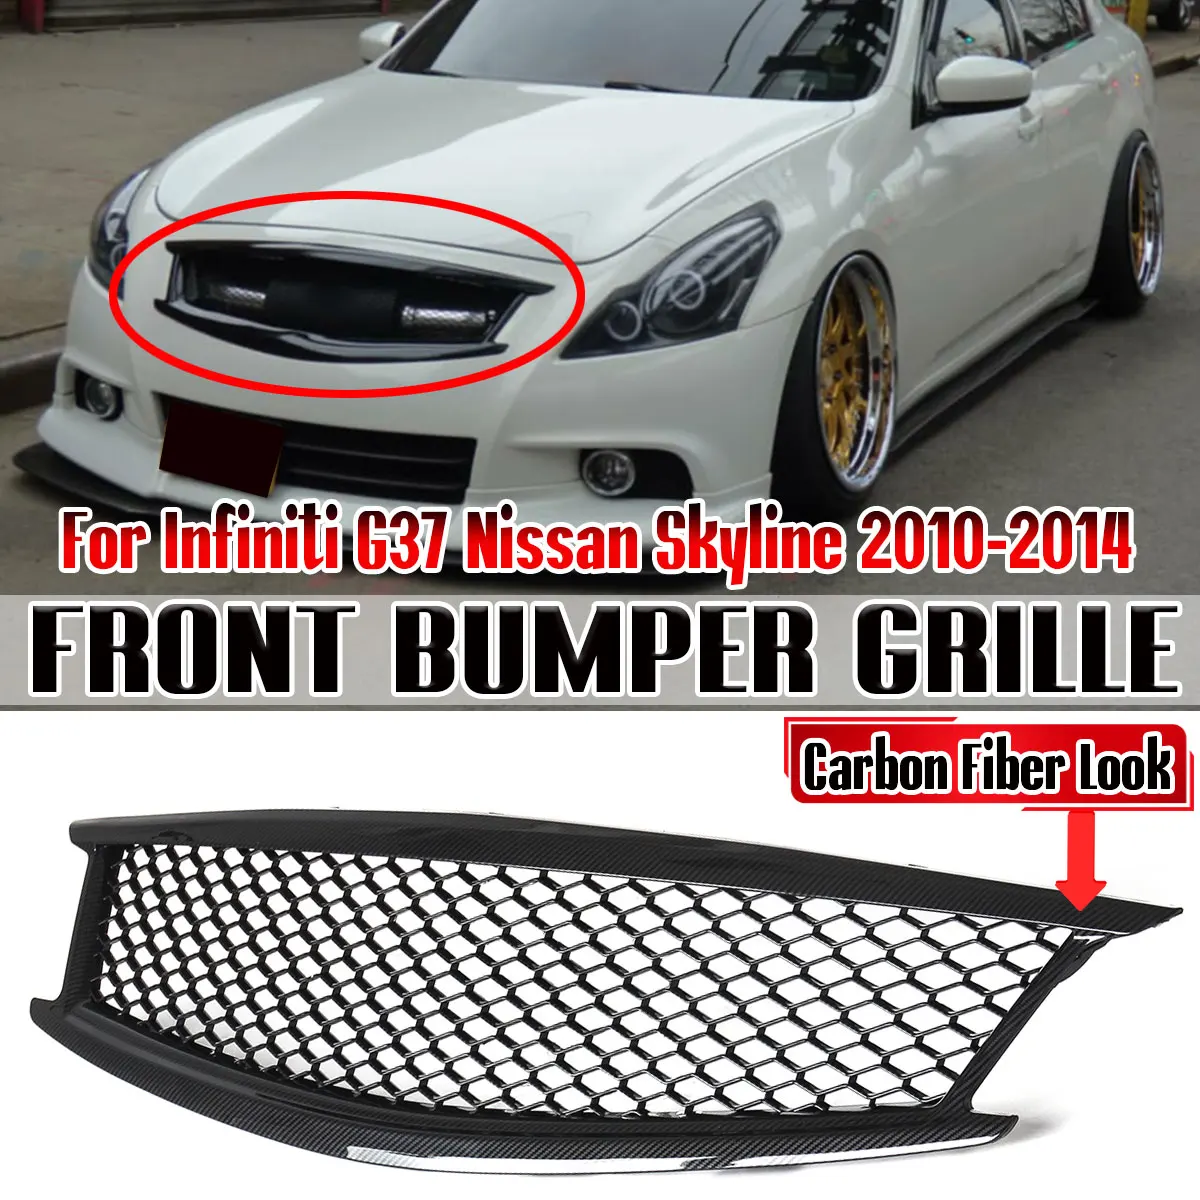 Black/Carbon Fiber Look Car Front Upper Hood Grille Front Bumper Grille Grill For Infiniti G37 For Nissan Skyline 2010-2014